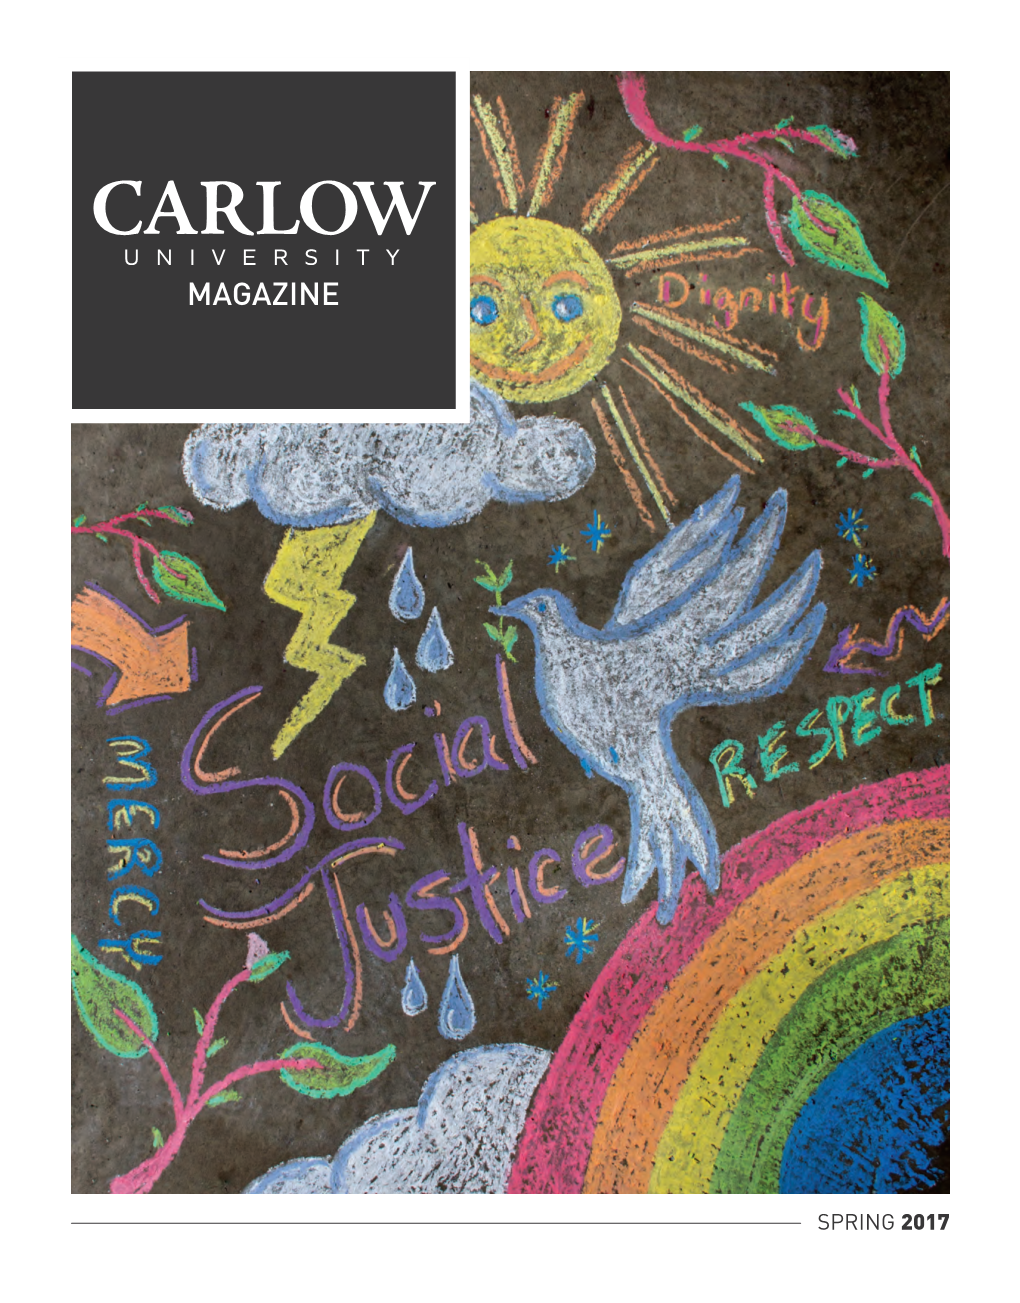 Carlow University Magazine, Spring 2017